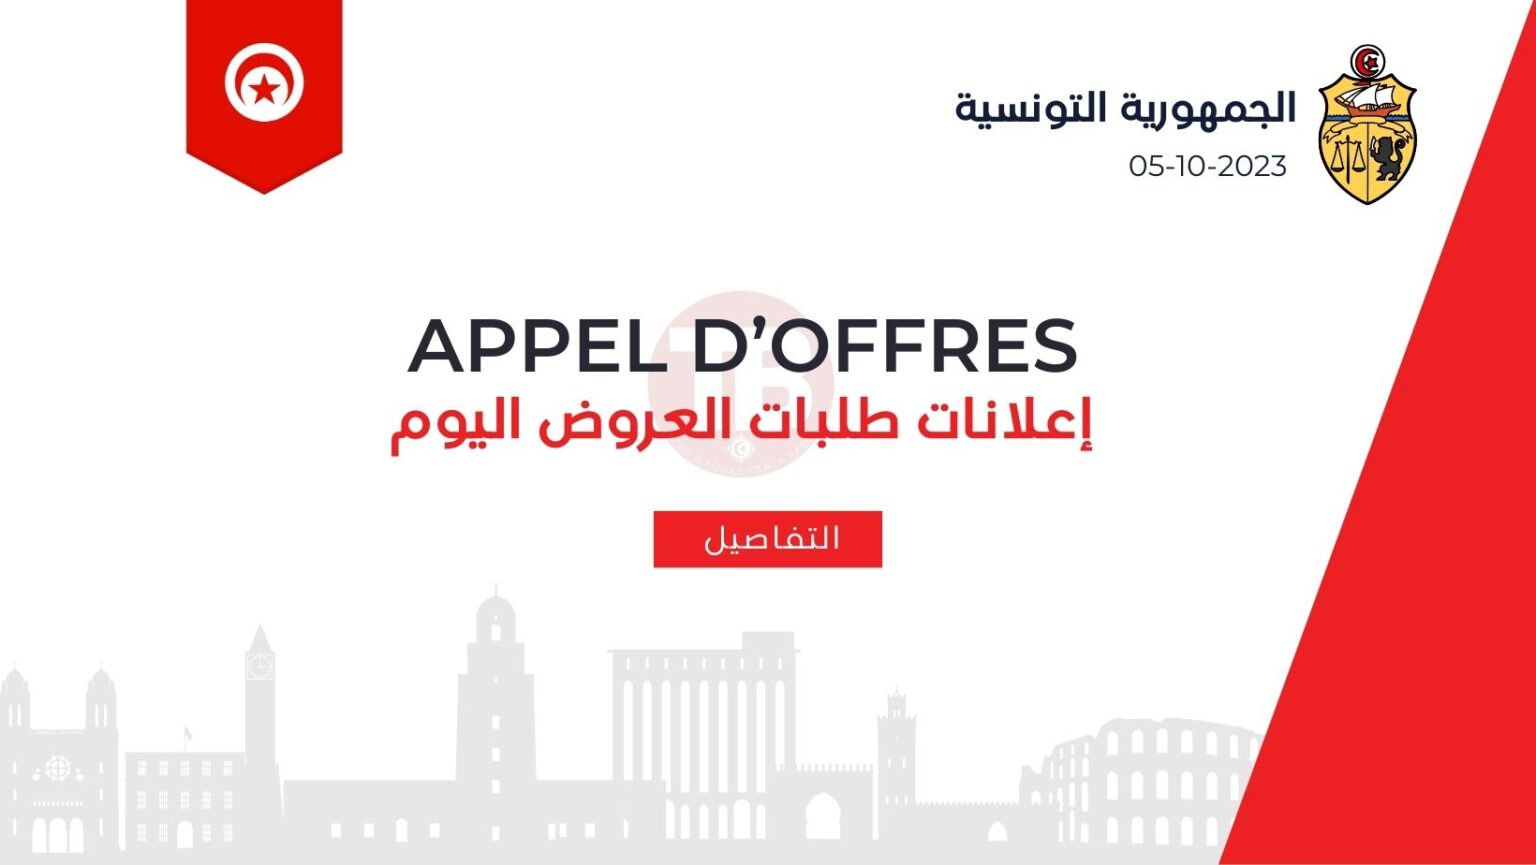 appel-doffre-tunisie-05-10-2023